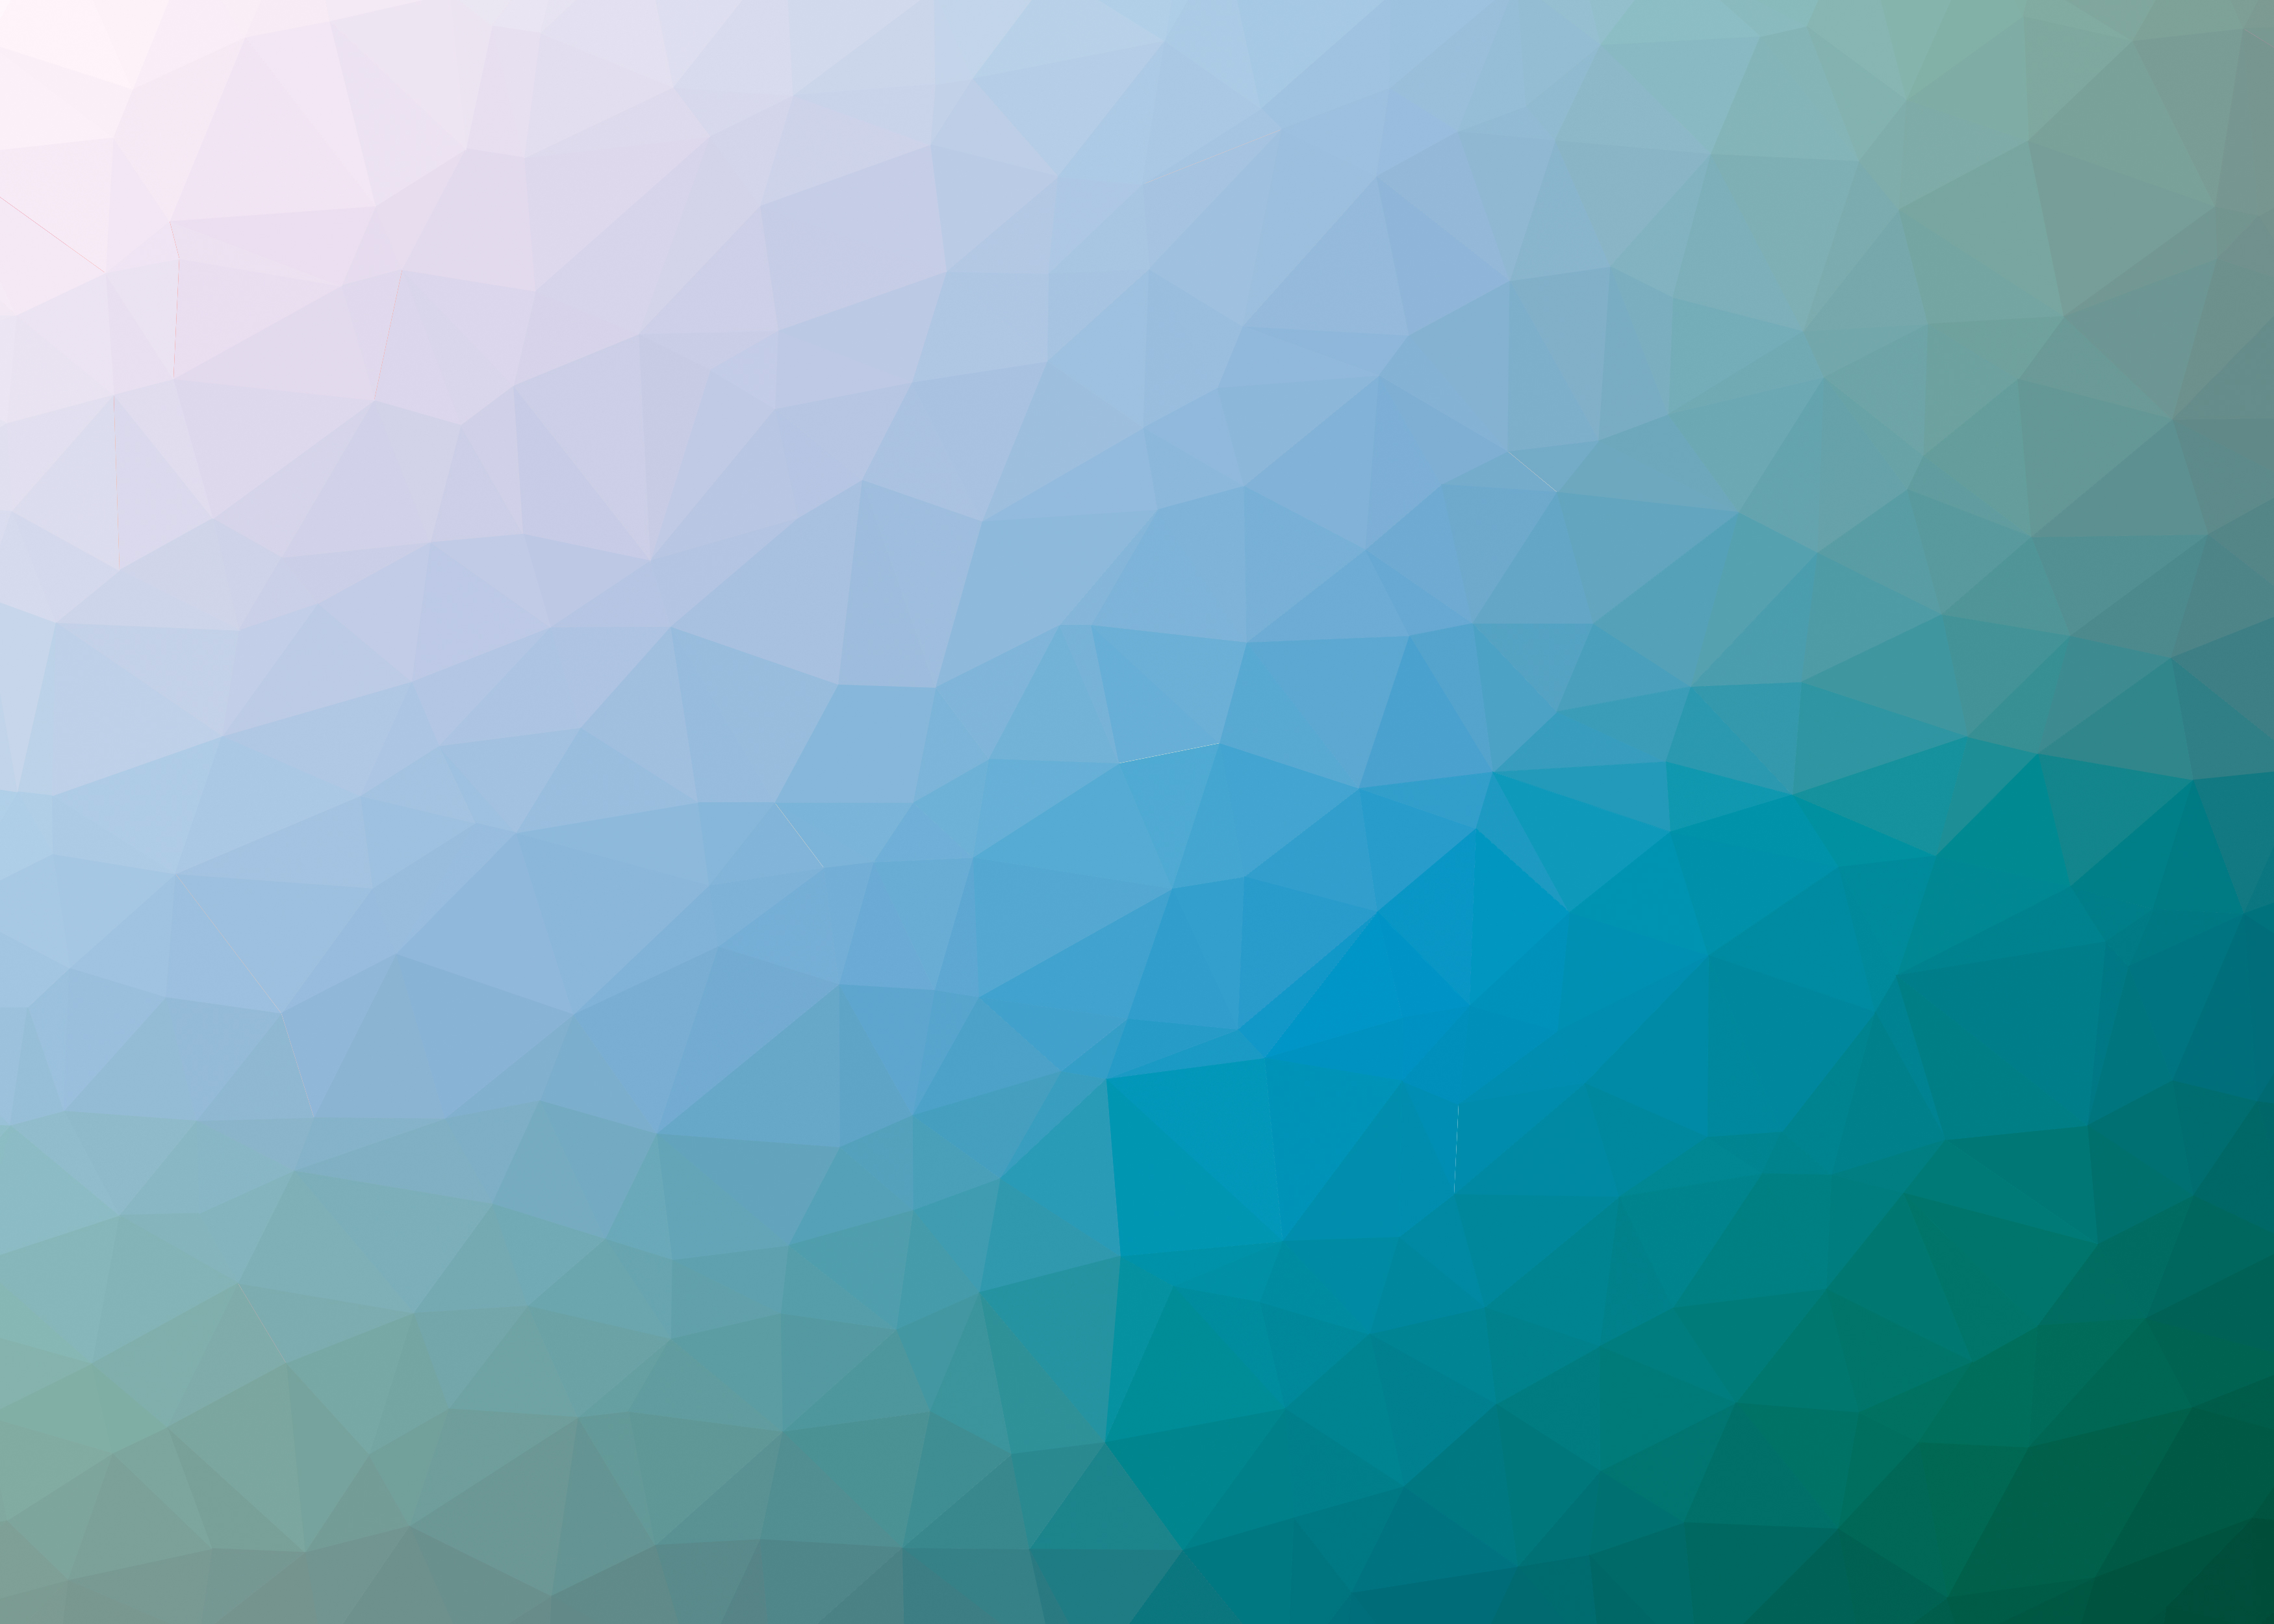 Geometry Shapes Pattern In Blue Wallpapers